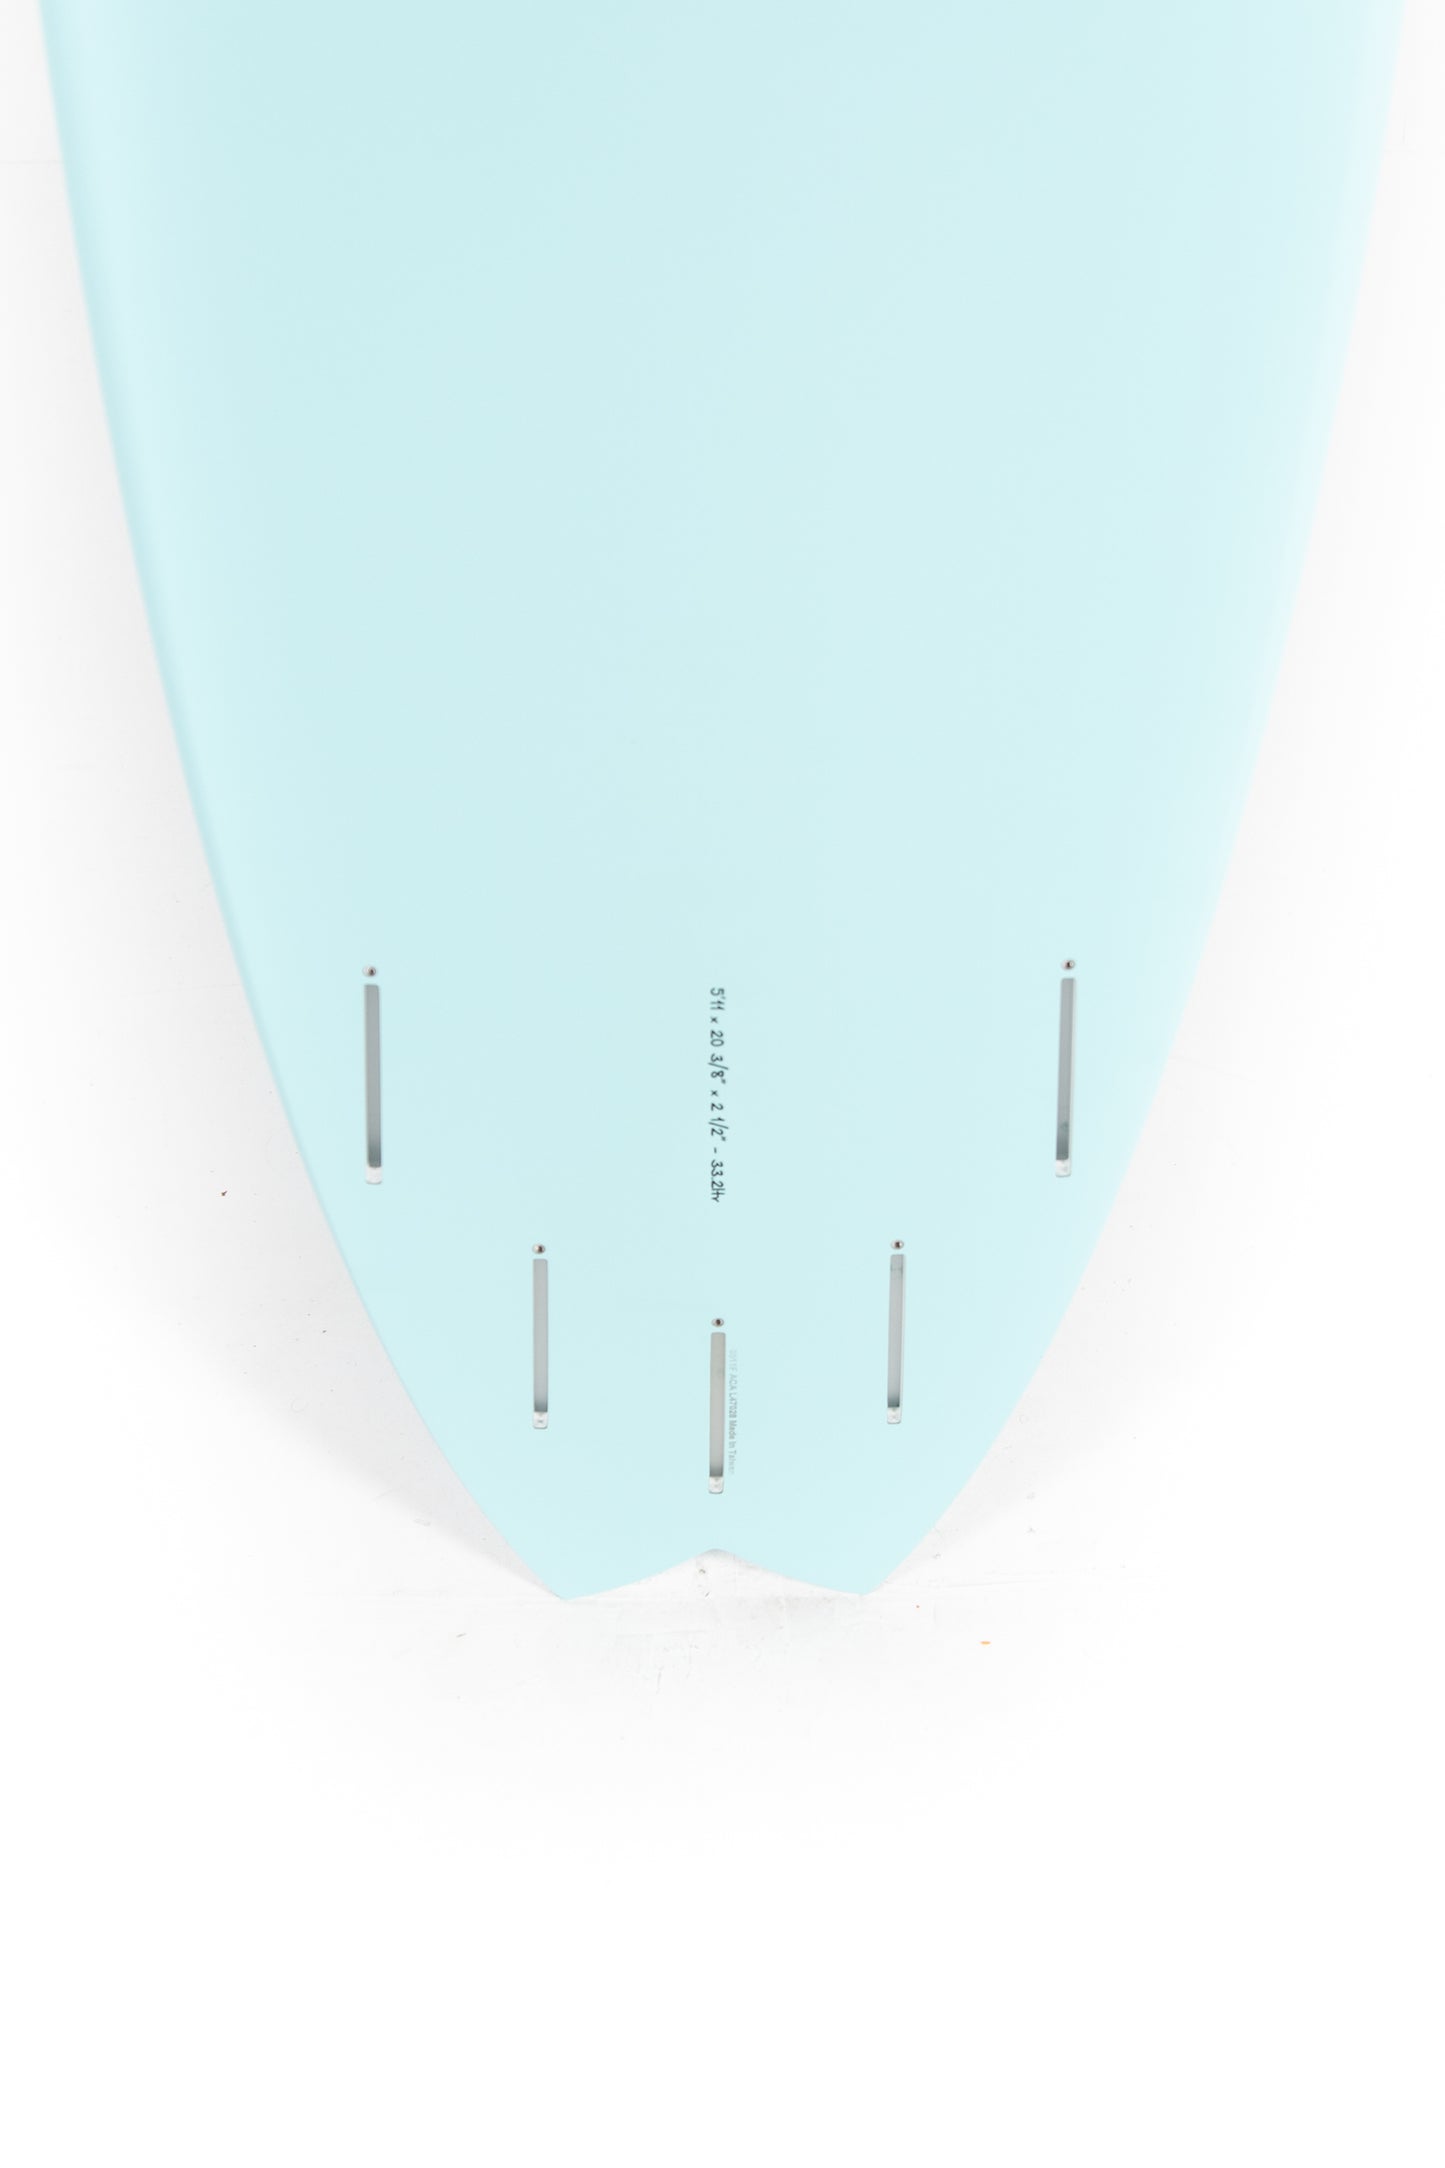 
                  
                    Pukas-Surf-Shop-Torq-Surfboards-Fish-5_11_-blue
                  
                